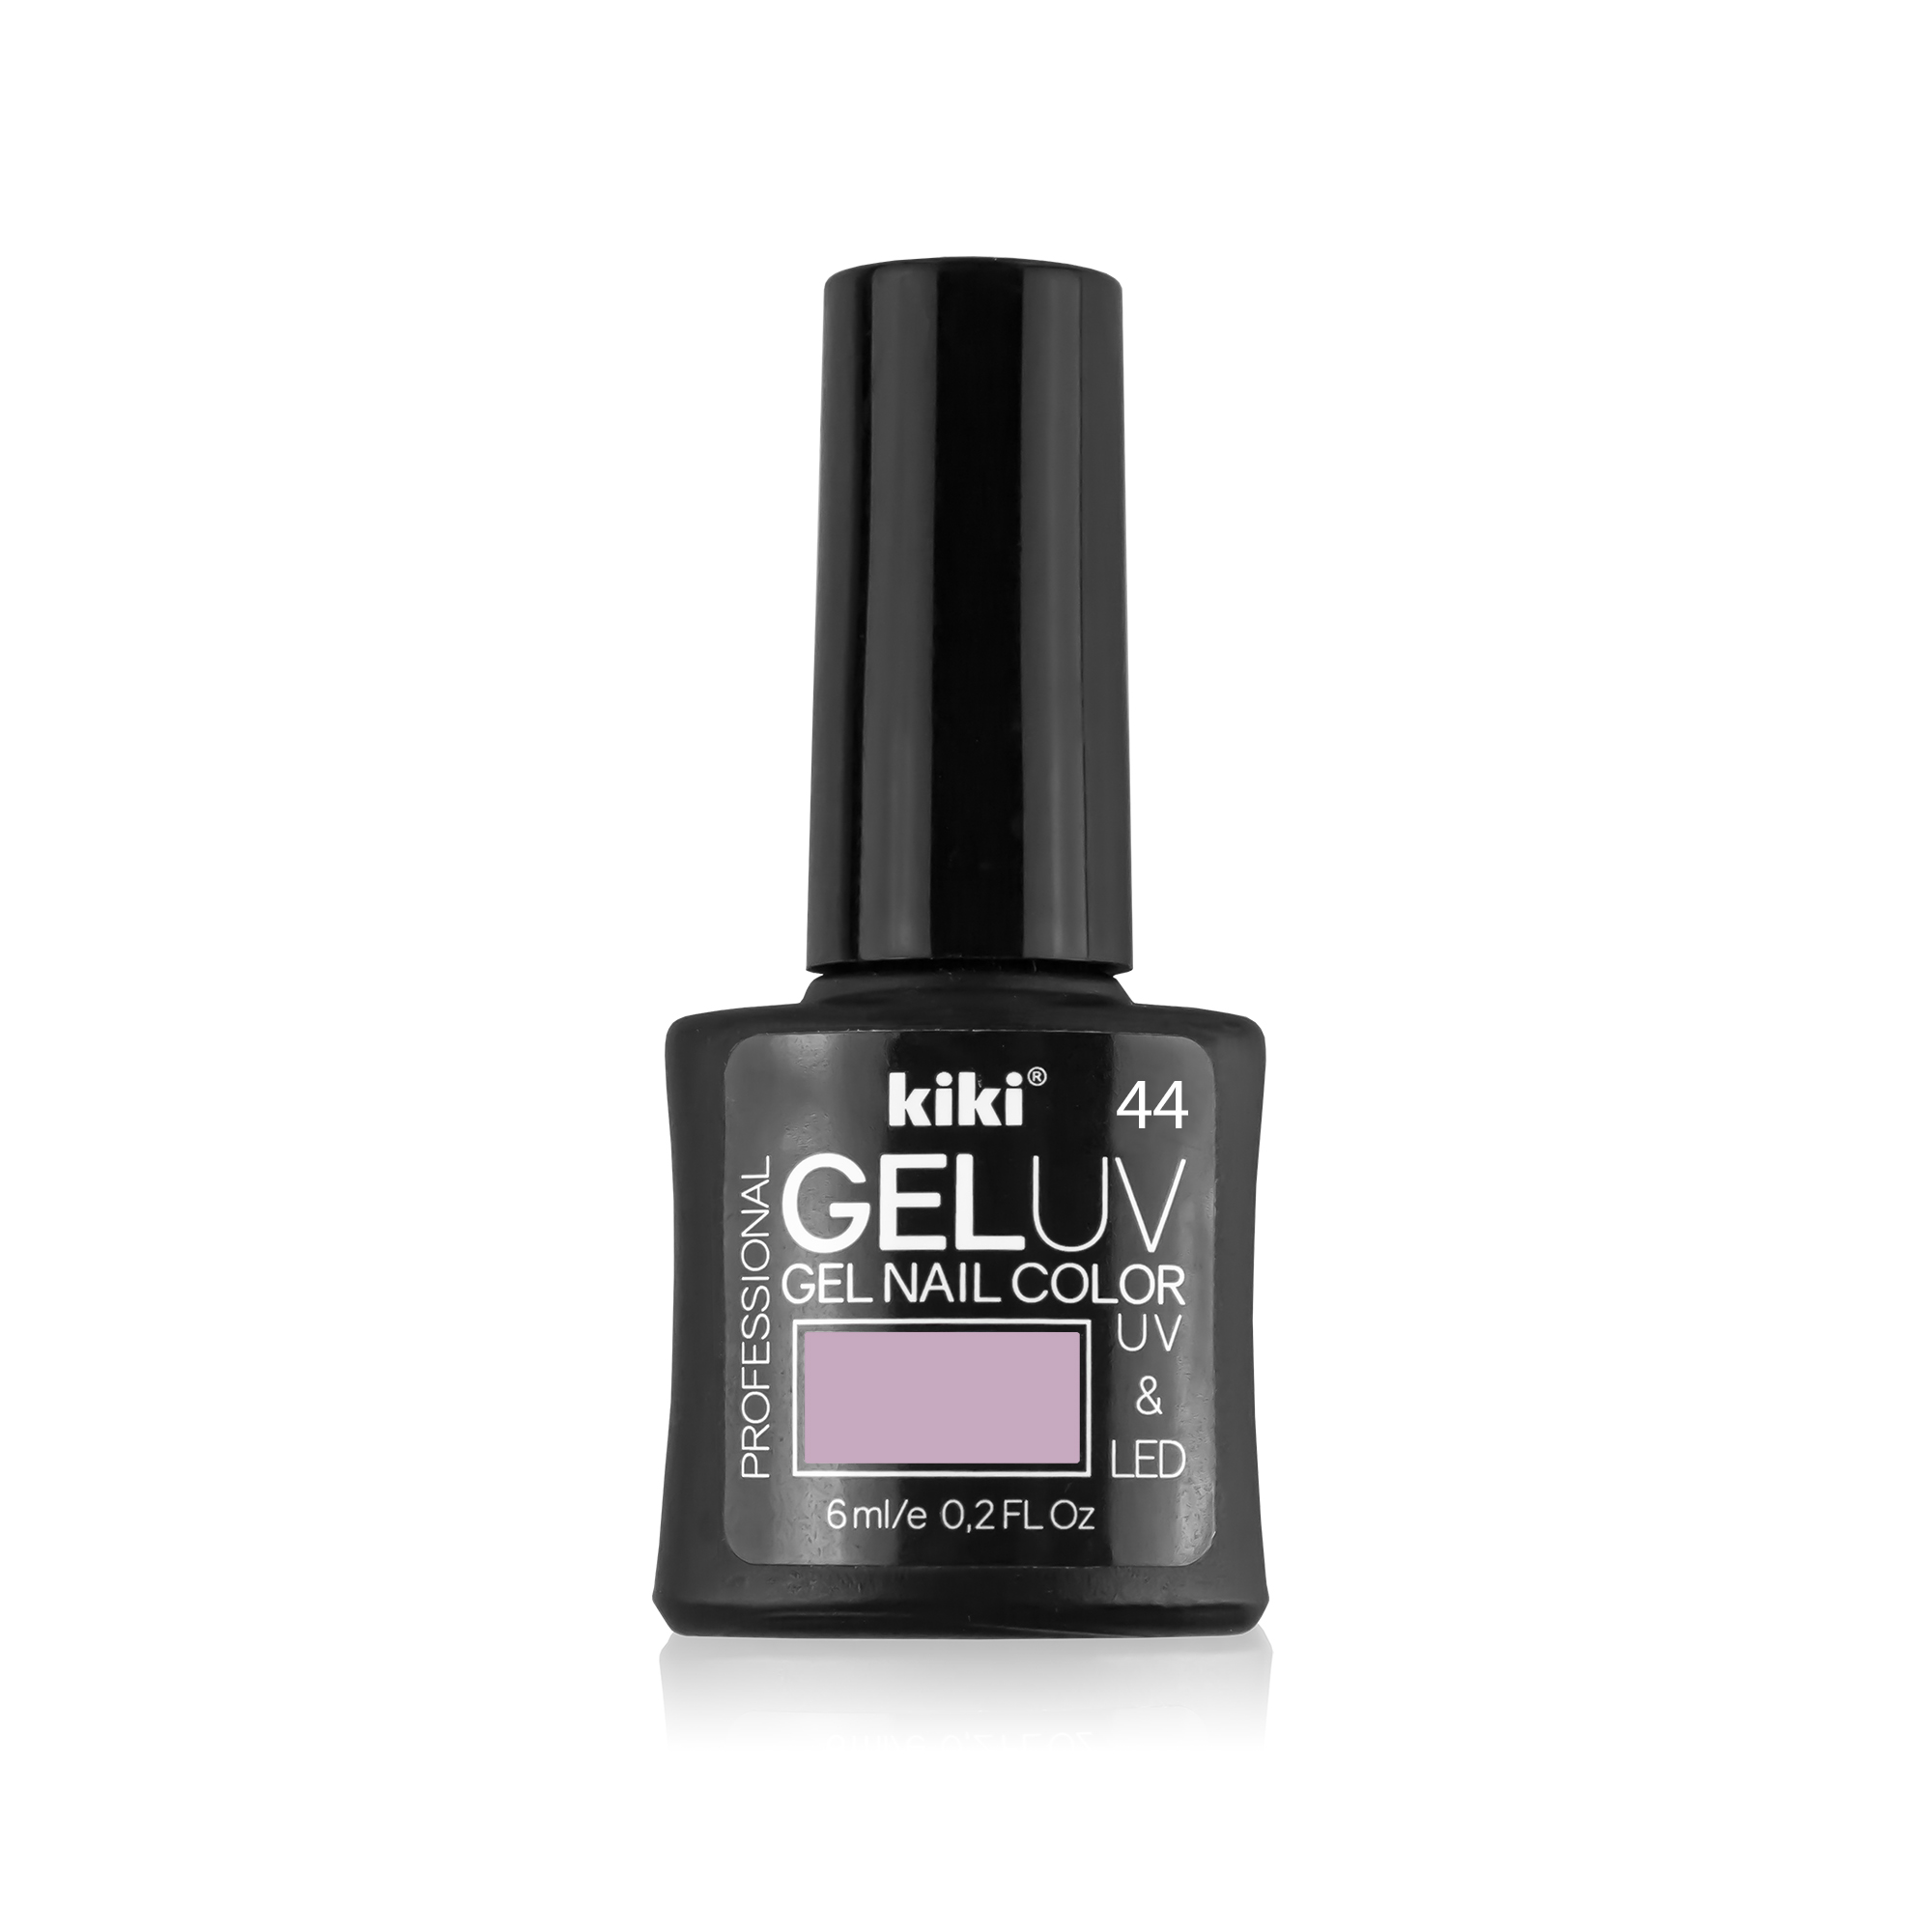 Гель-лак для ногтей Kiki Gel Uv&Led 44 светло-розово лиловый